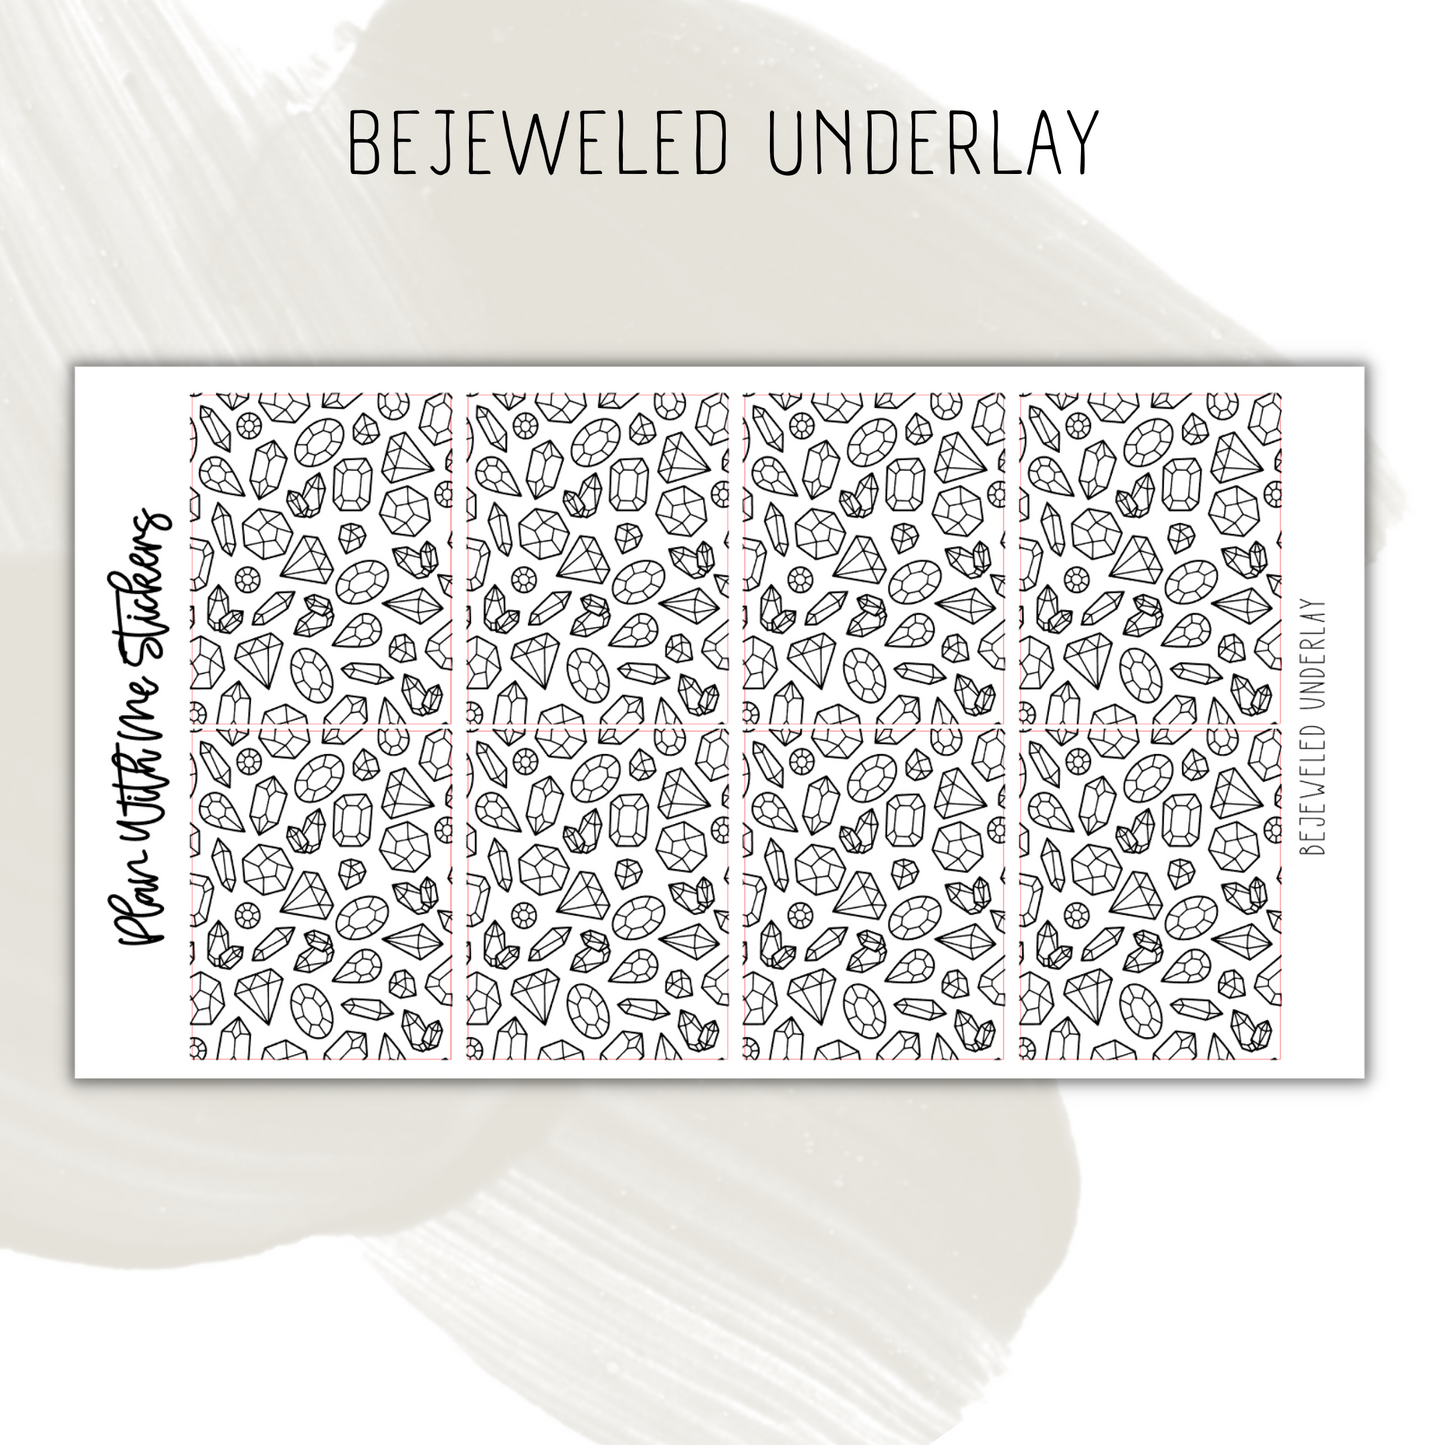 Bejeweled Underlay